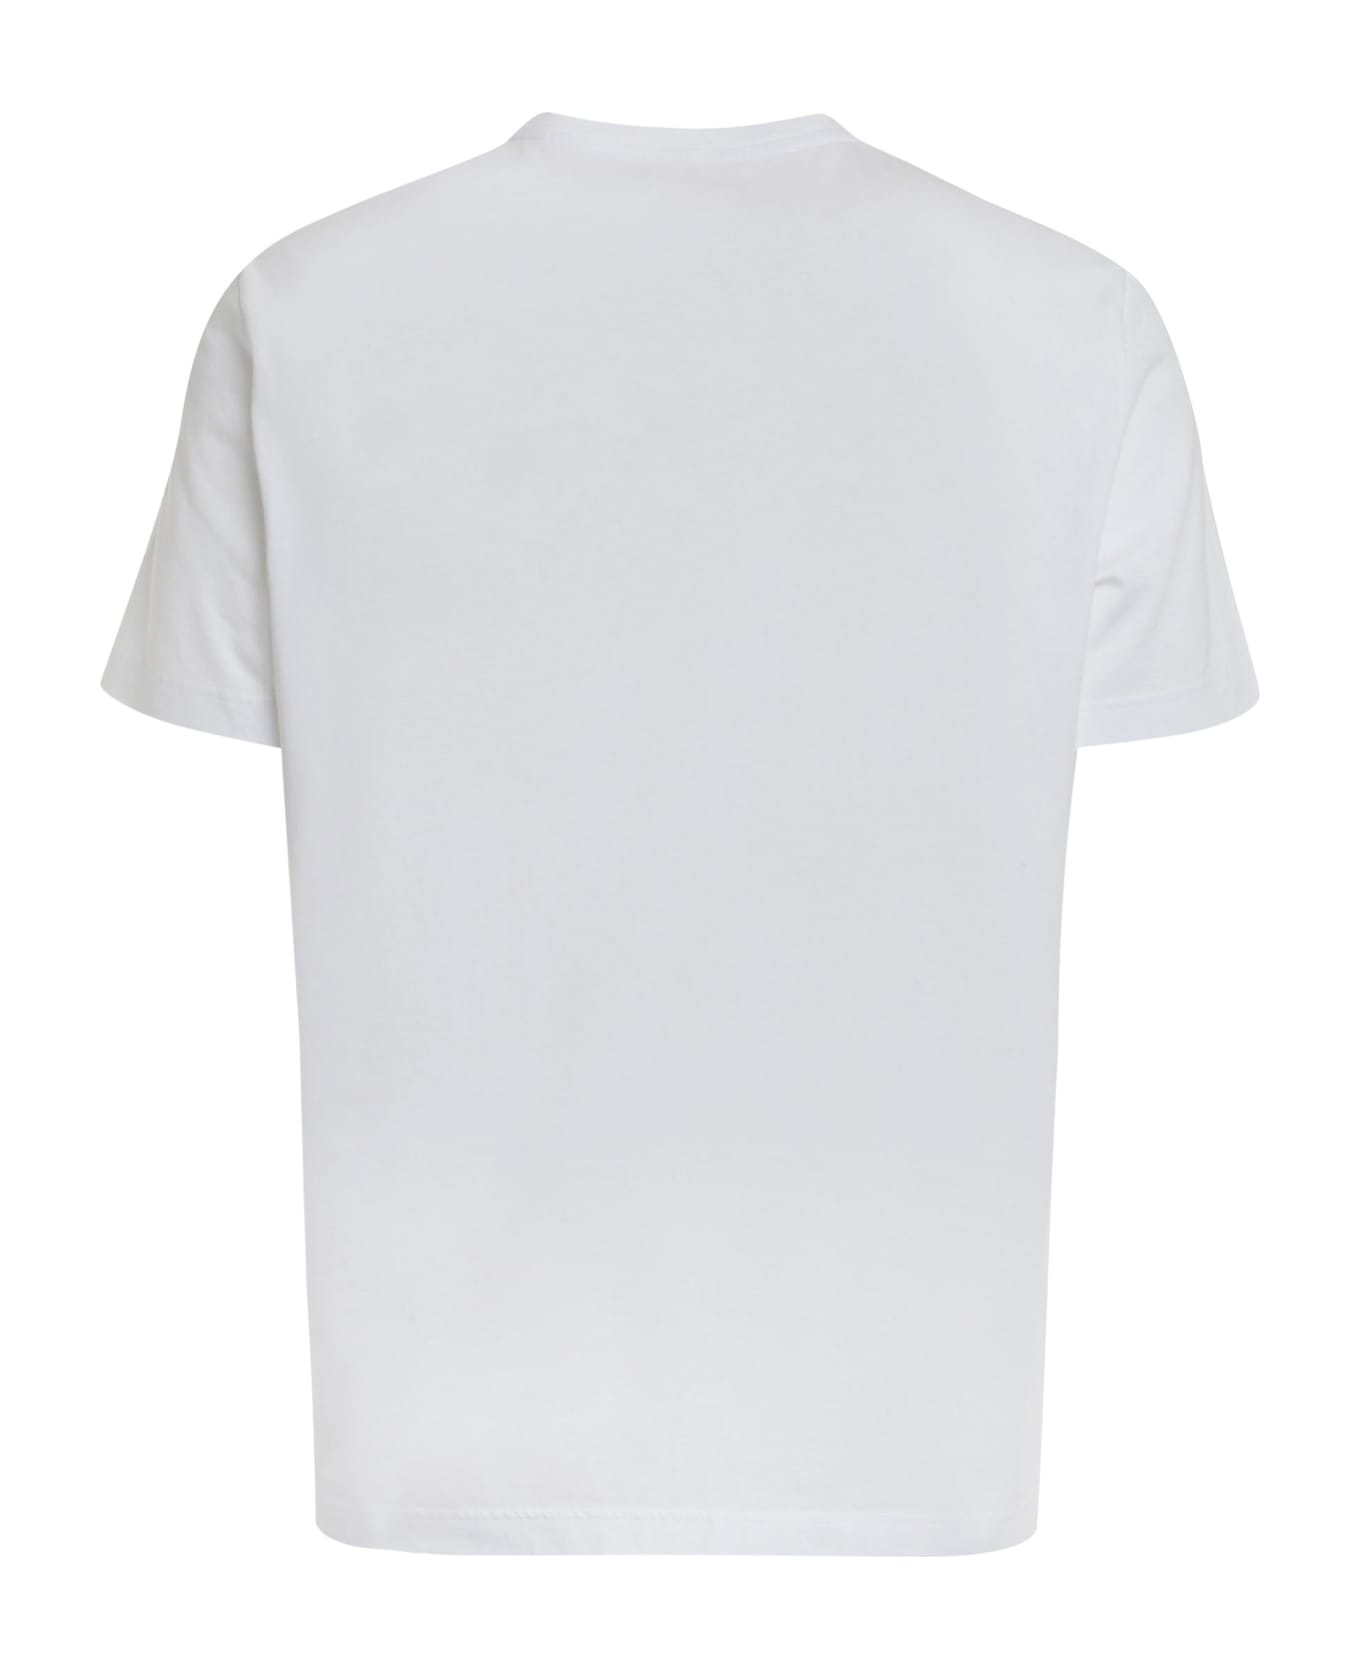 Golden Goose Star T-shirt - Bianco